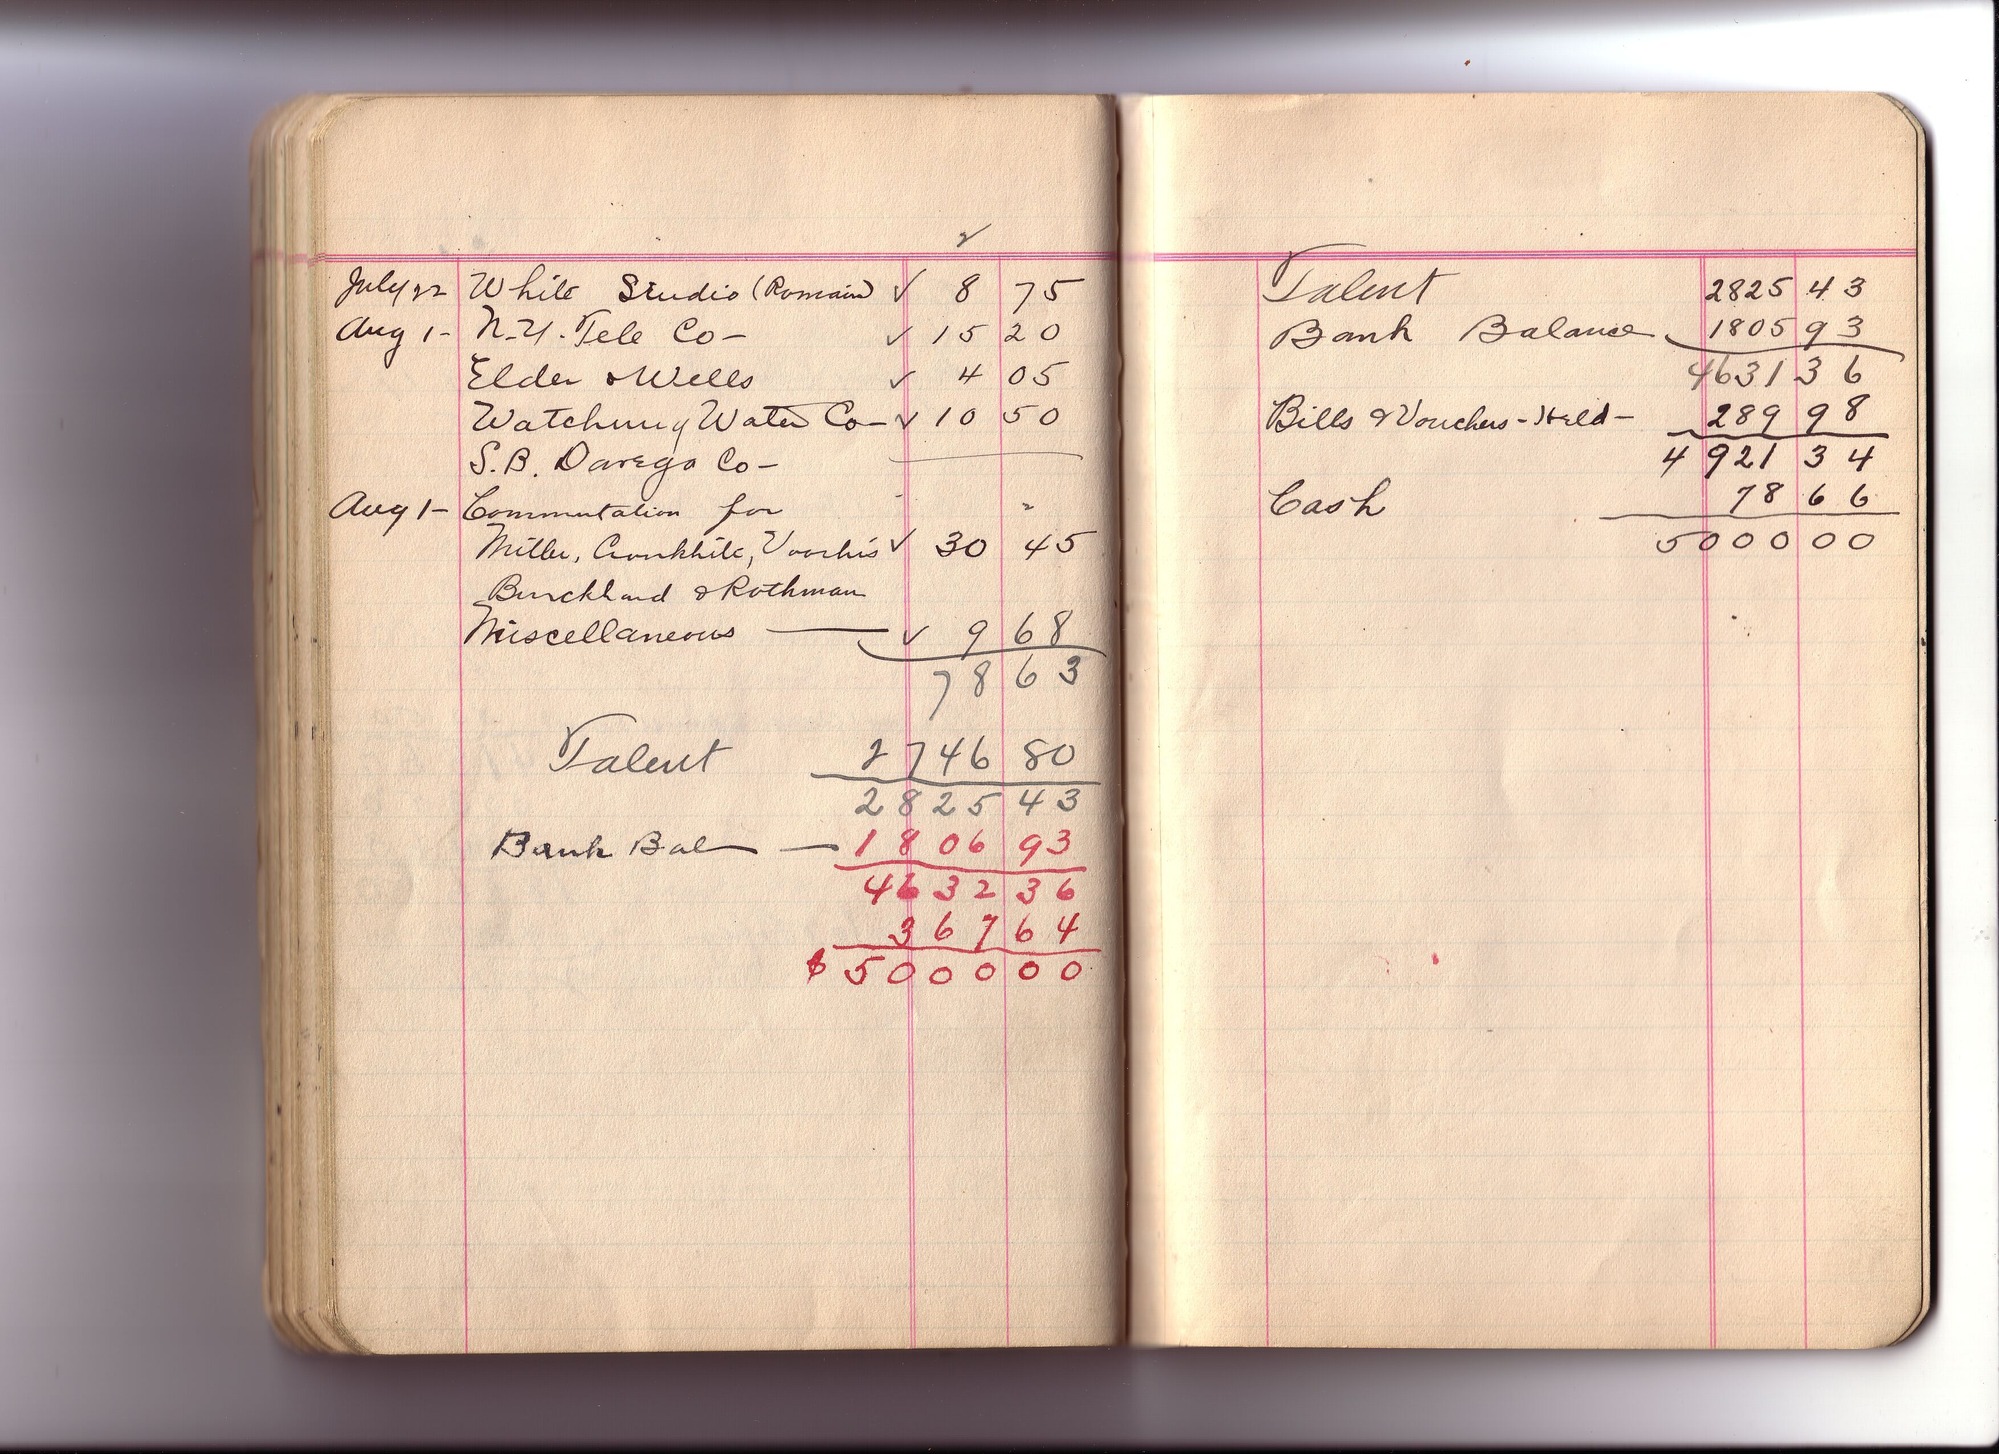 Thomas Edison's New York City Recording Studio Cash Book 07 (of 21), Image 47 (of 50).